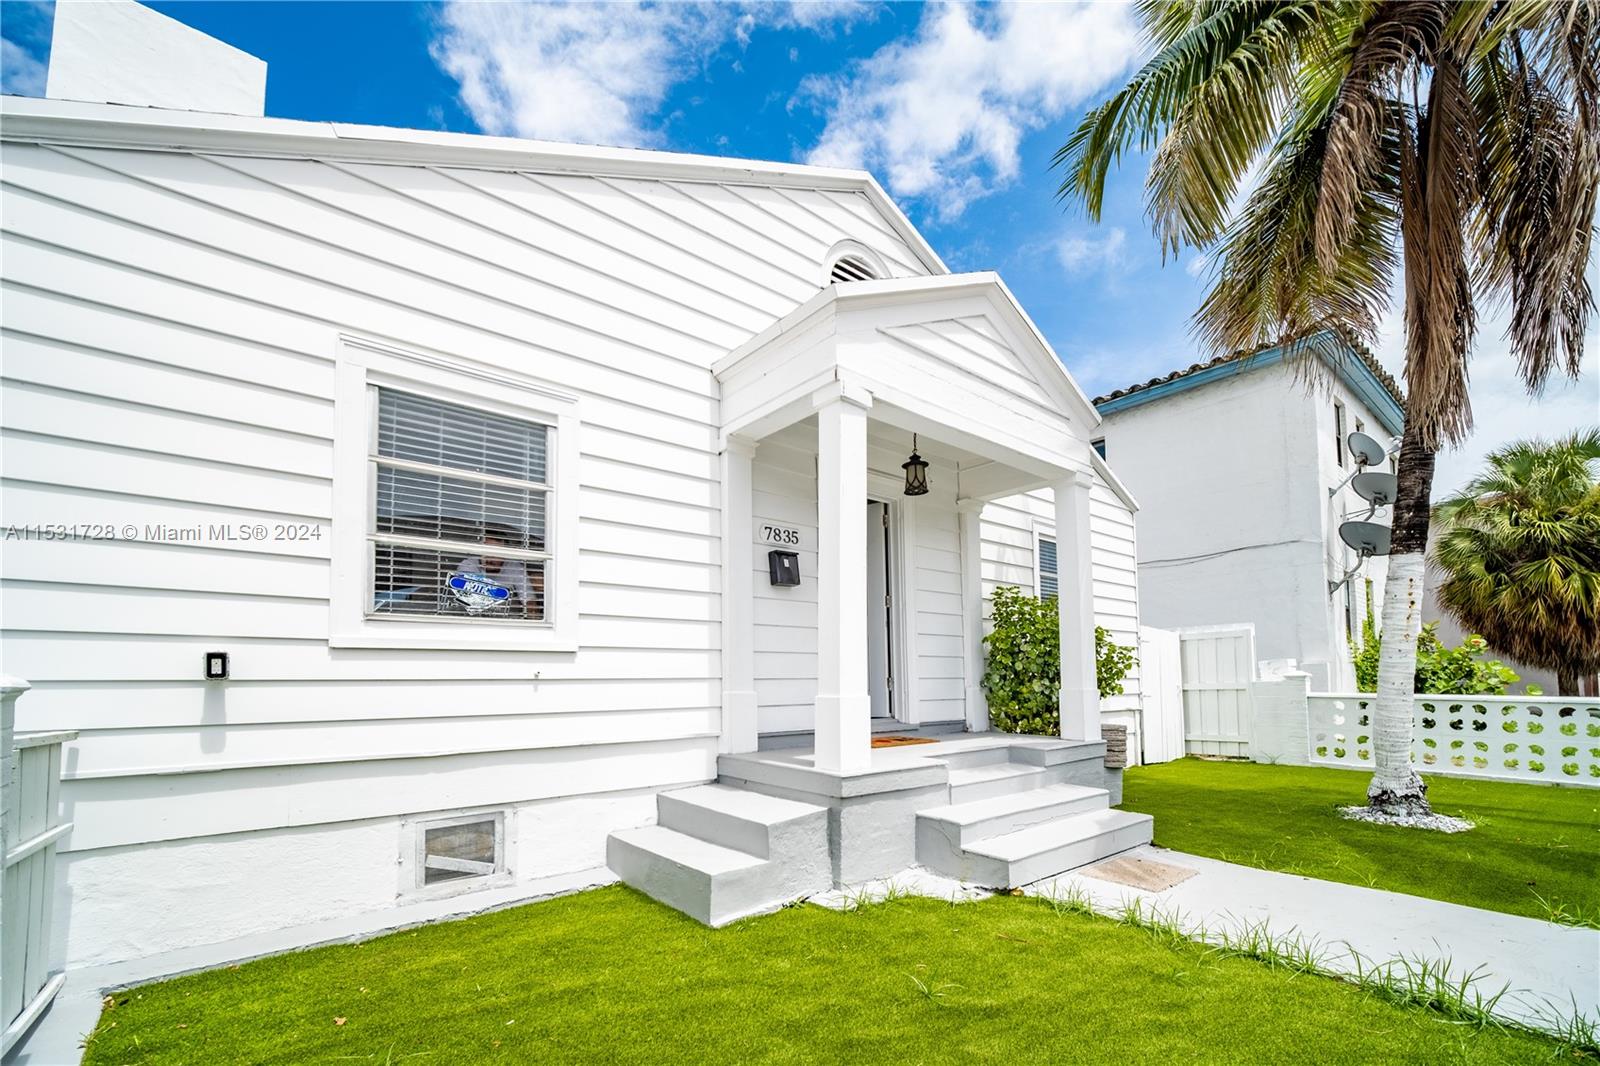 Rental Property at 7835 Harding Ave, Miami Beach, Miami-Dade County, Florida -  - $1,695,000 MO.